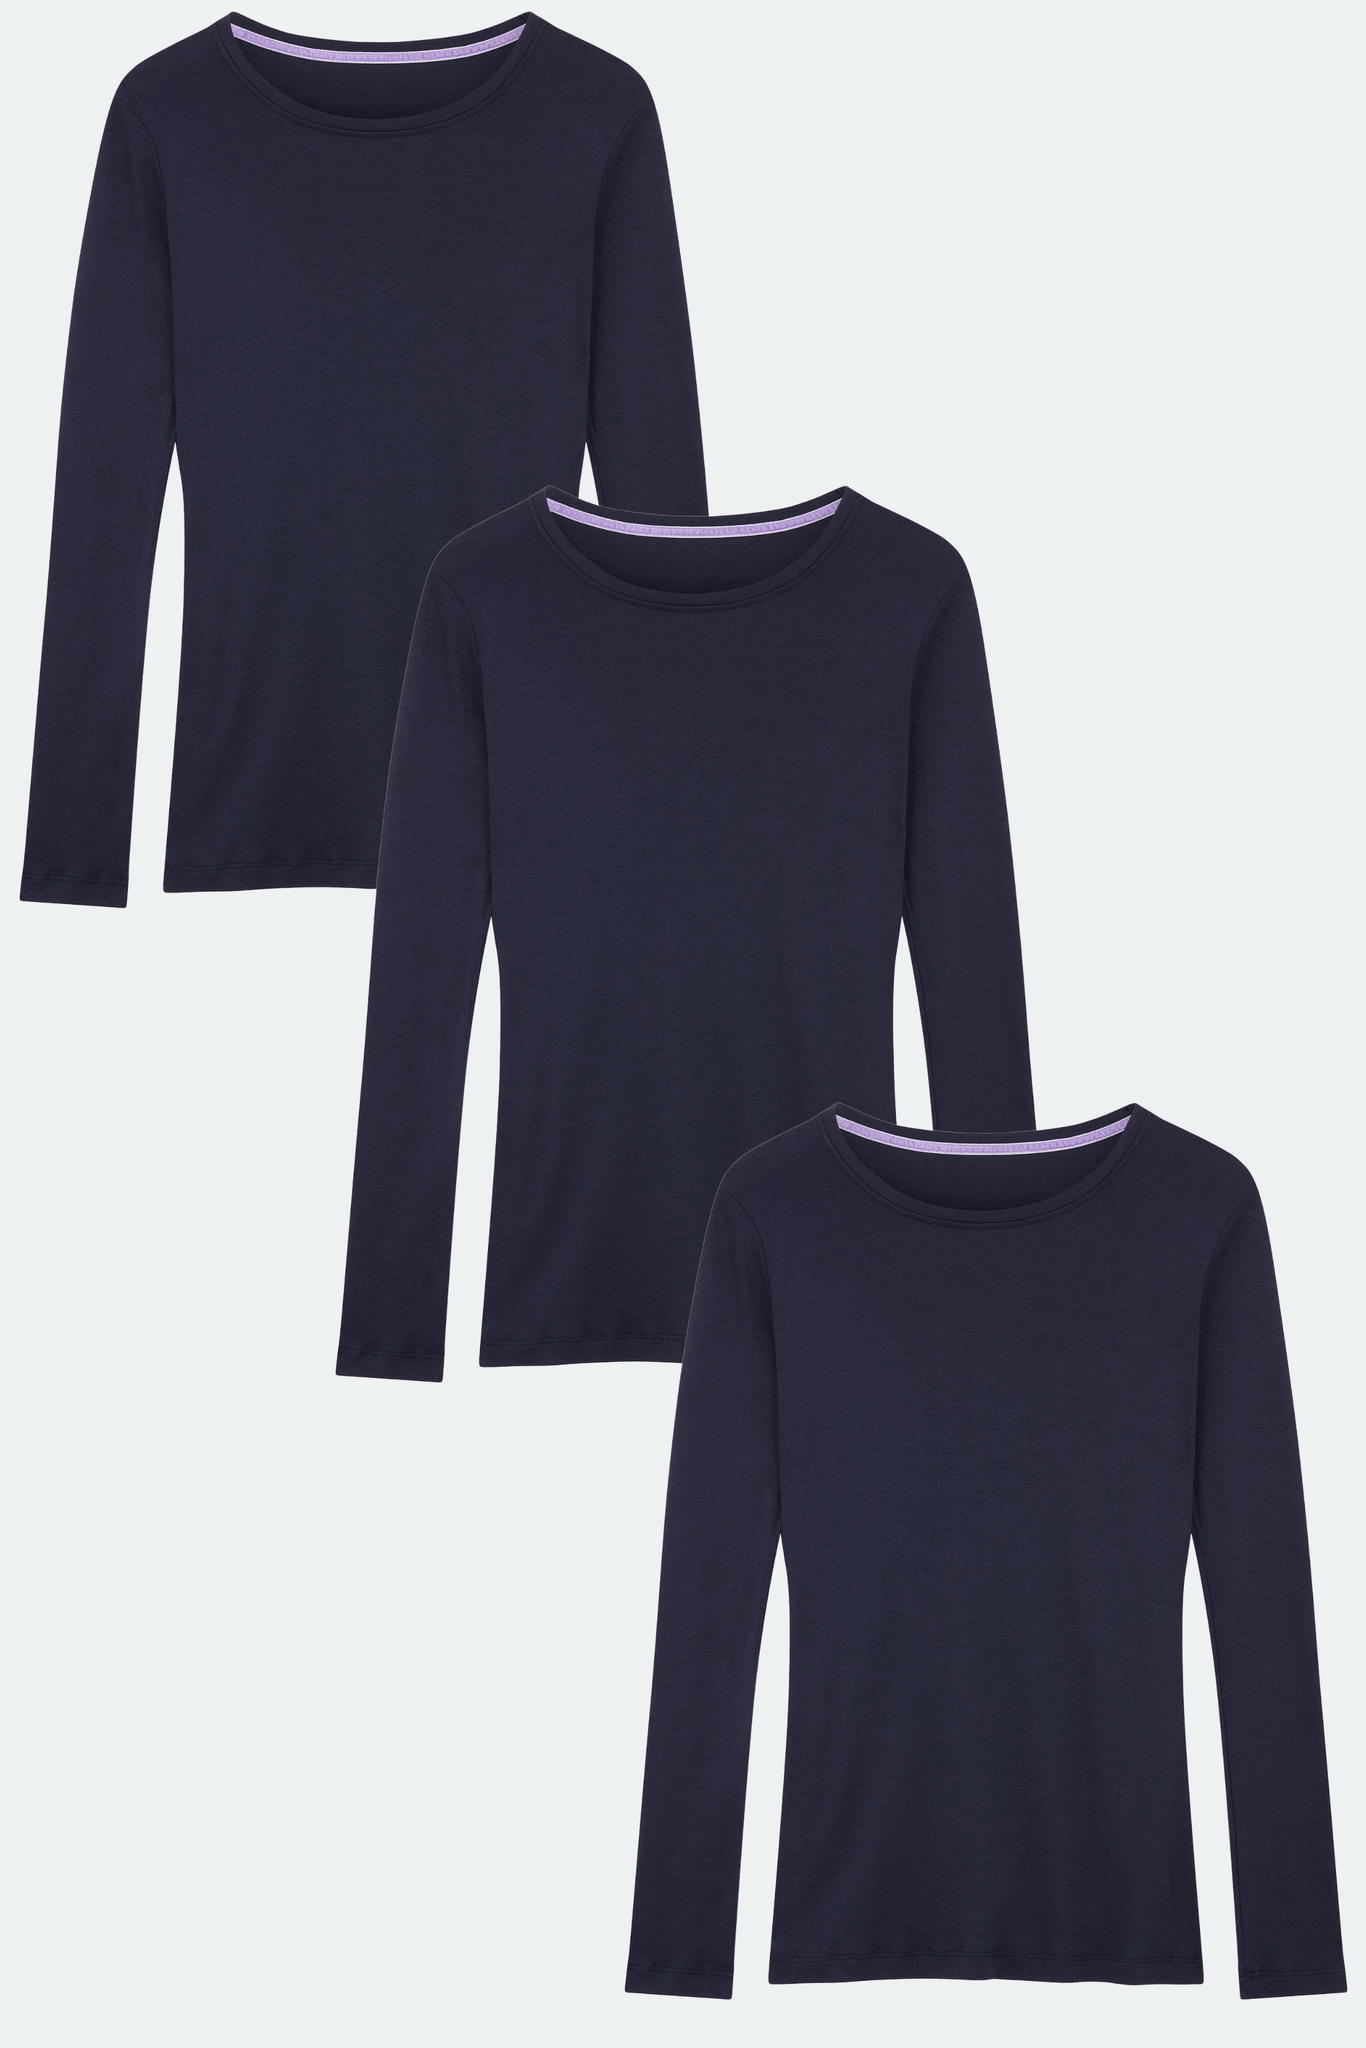 Long Sleeve Crew Neck Lavender Modal T-shirt Bundle Clothing | Blend Hill Cotton